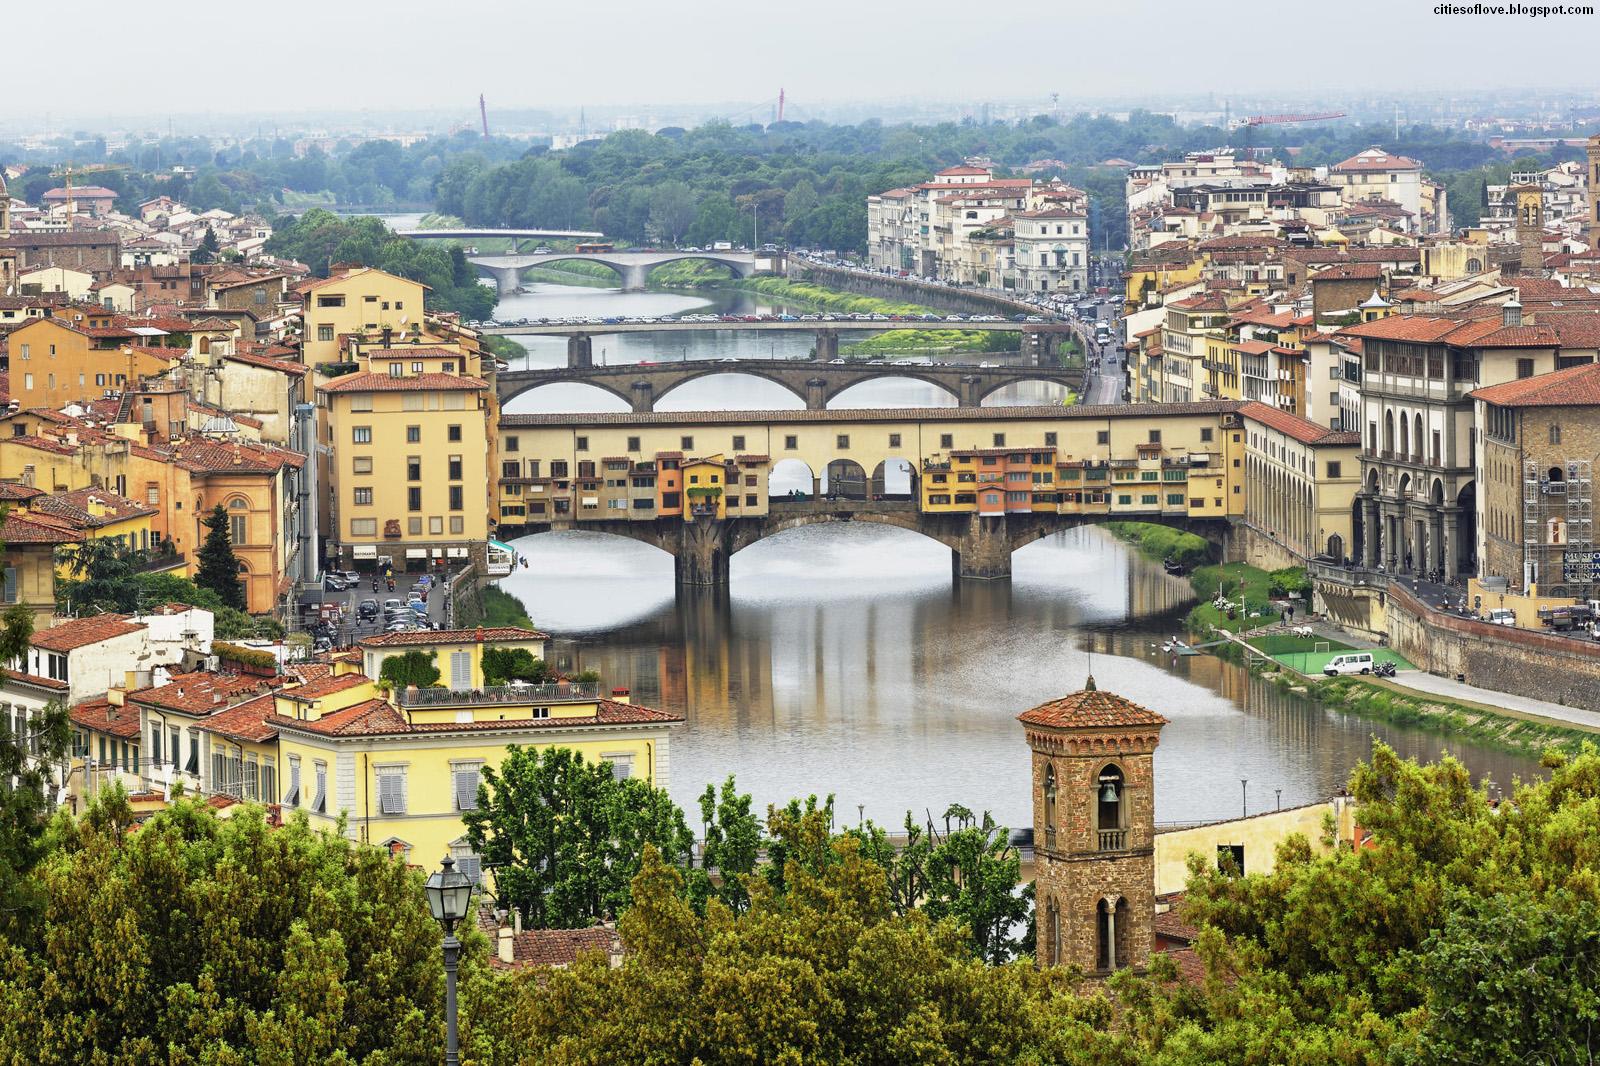  Italian Old Bridge Arno River Italy Hd Desktop Wallpaper Image Gallery 1600x1066